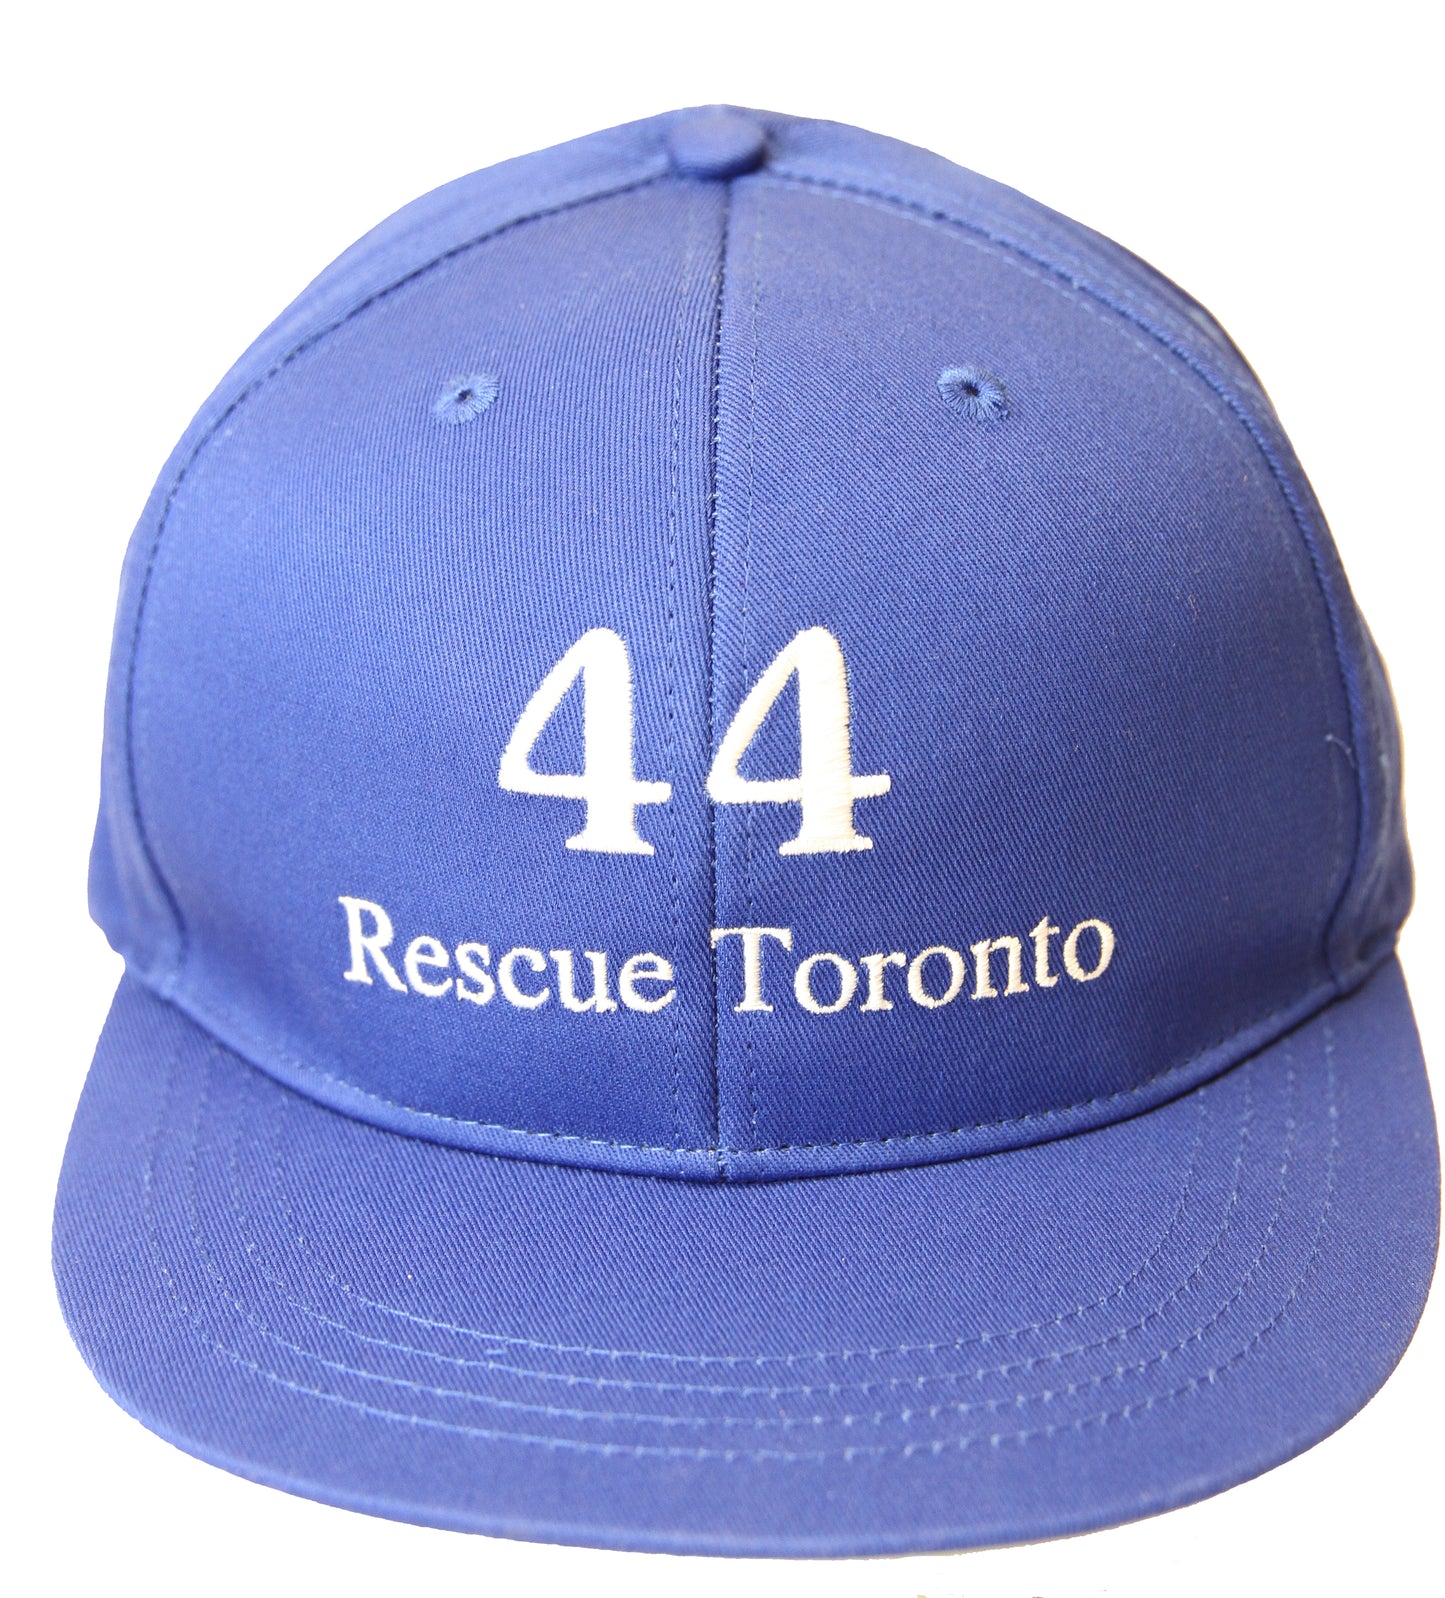 Here to rescue Toronto (Blue)